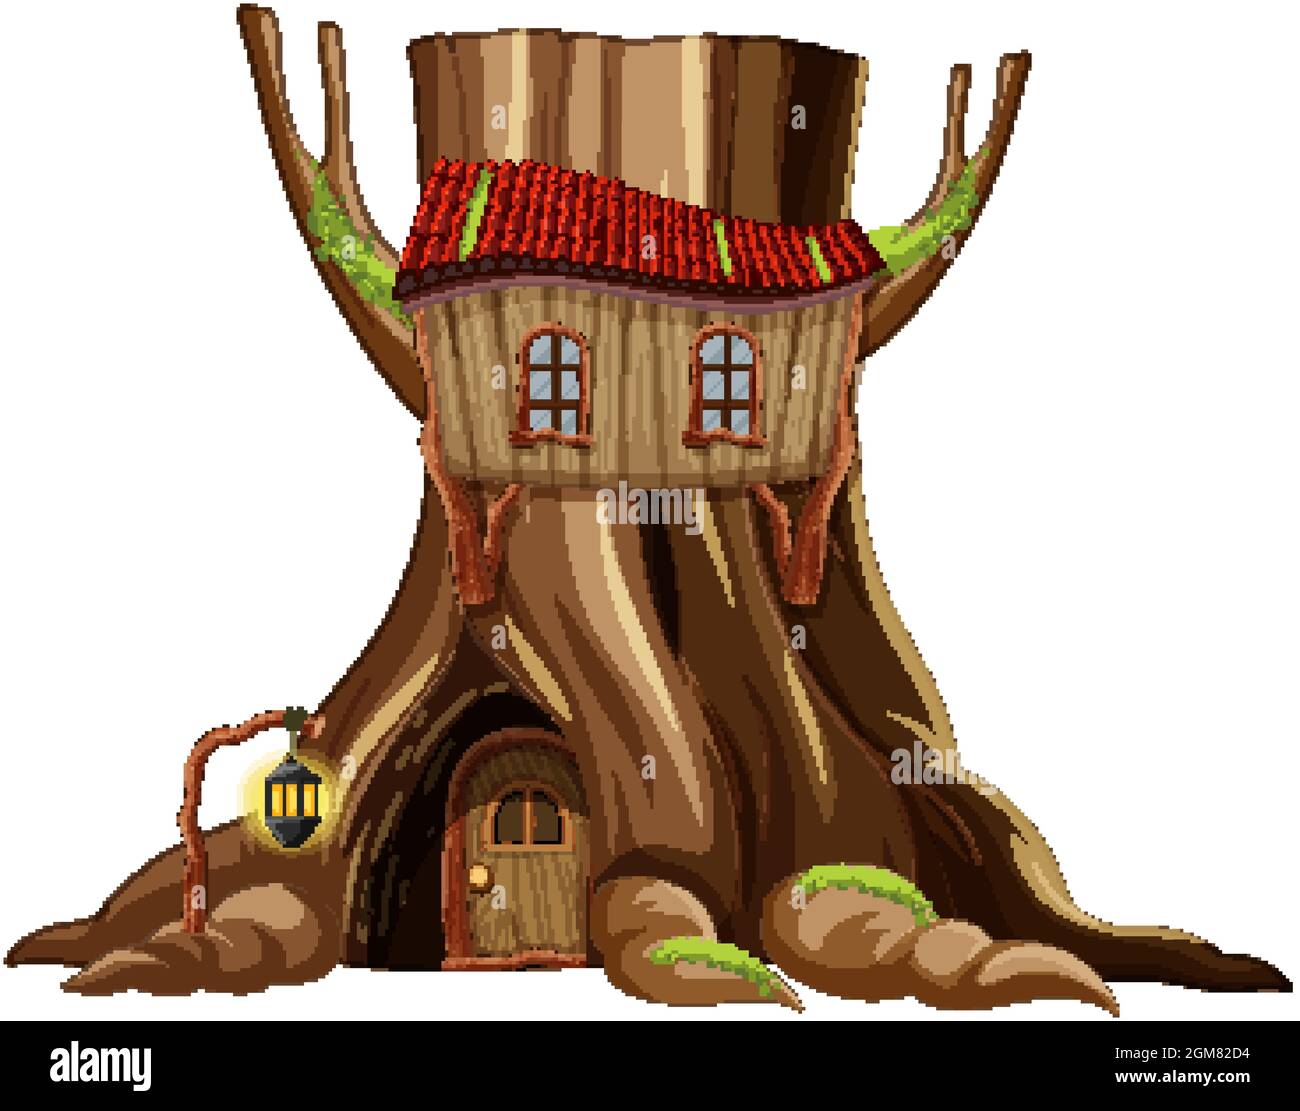 Tree house inside the tree trunk illustration Stock Vector